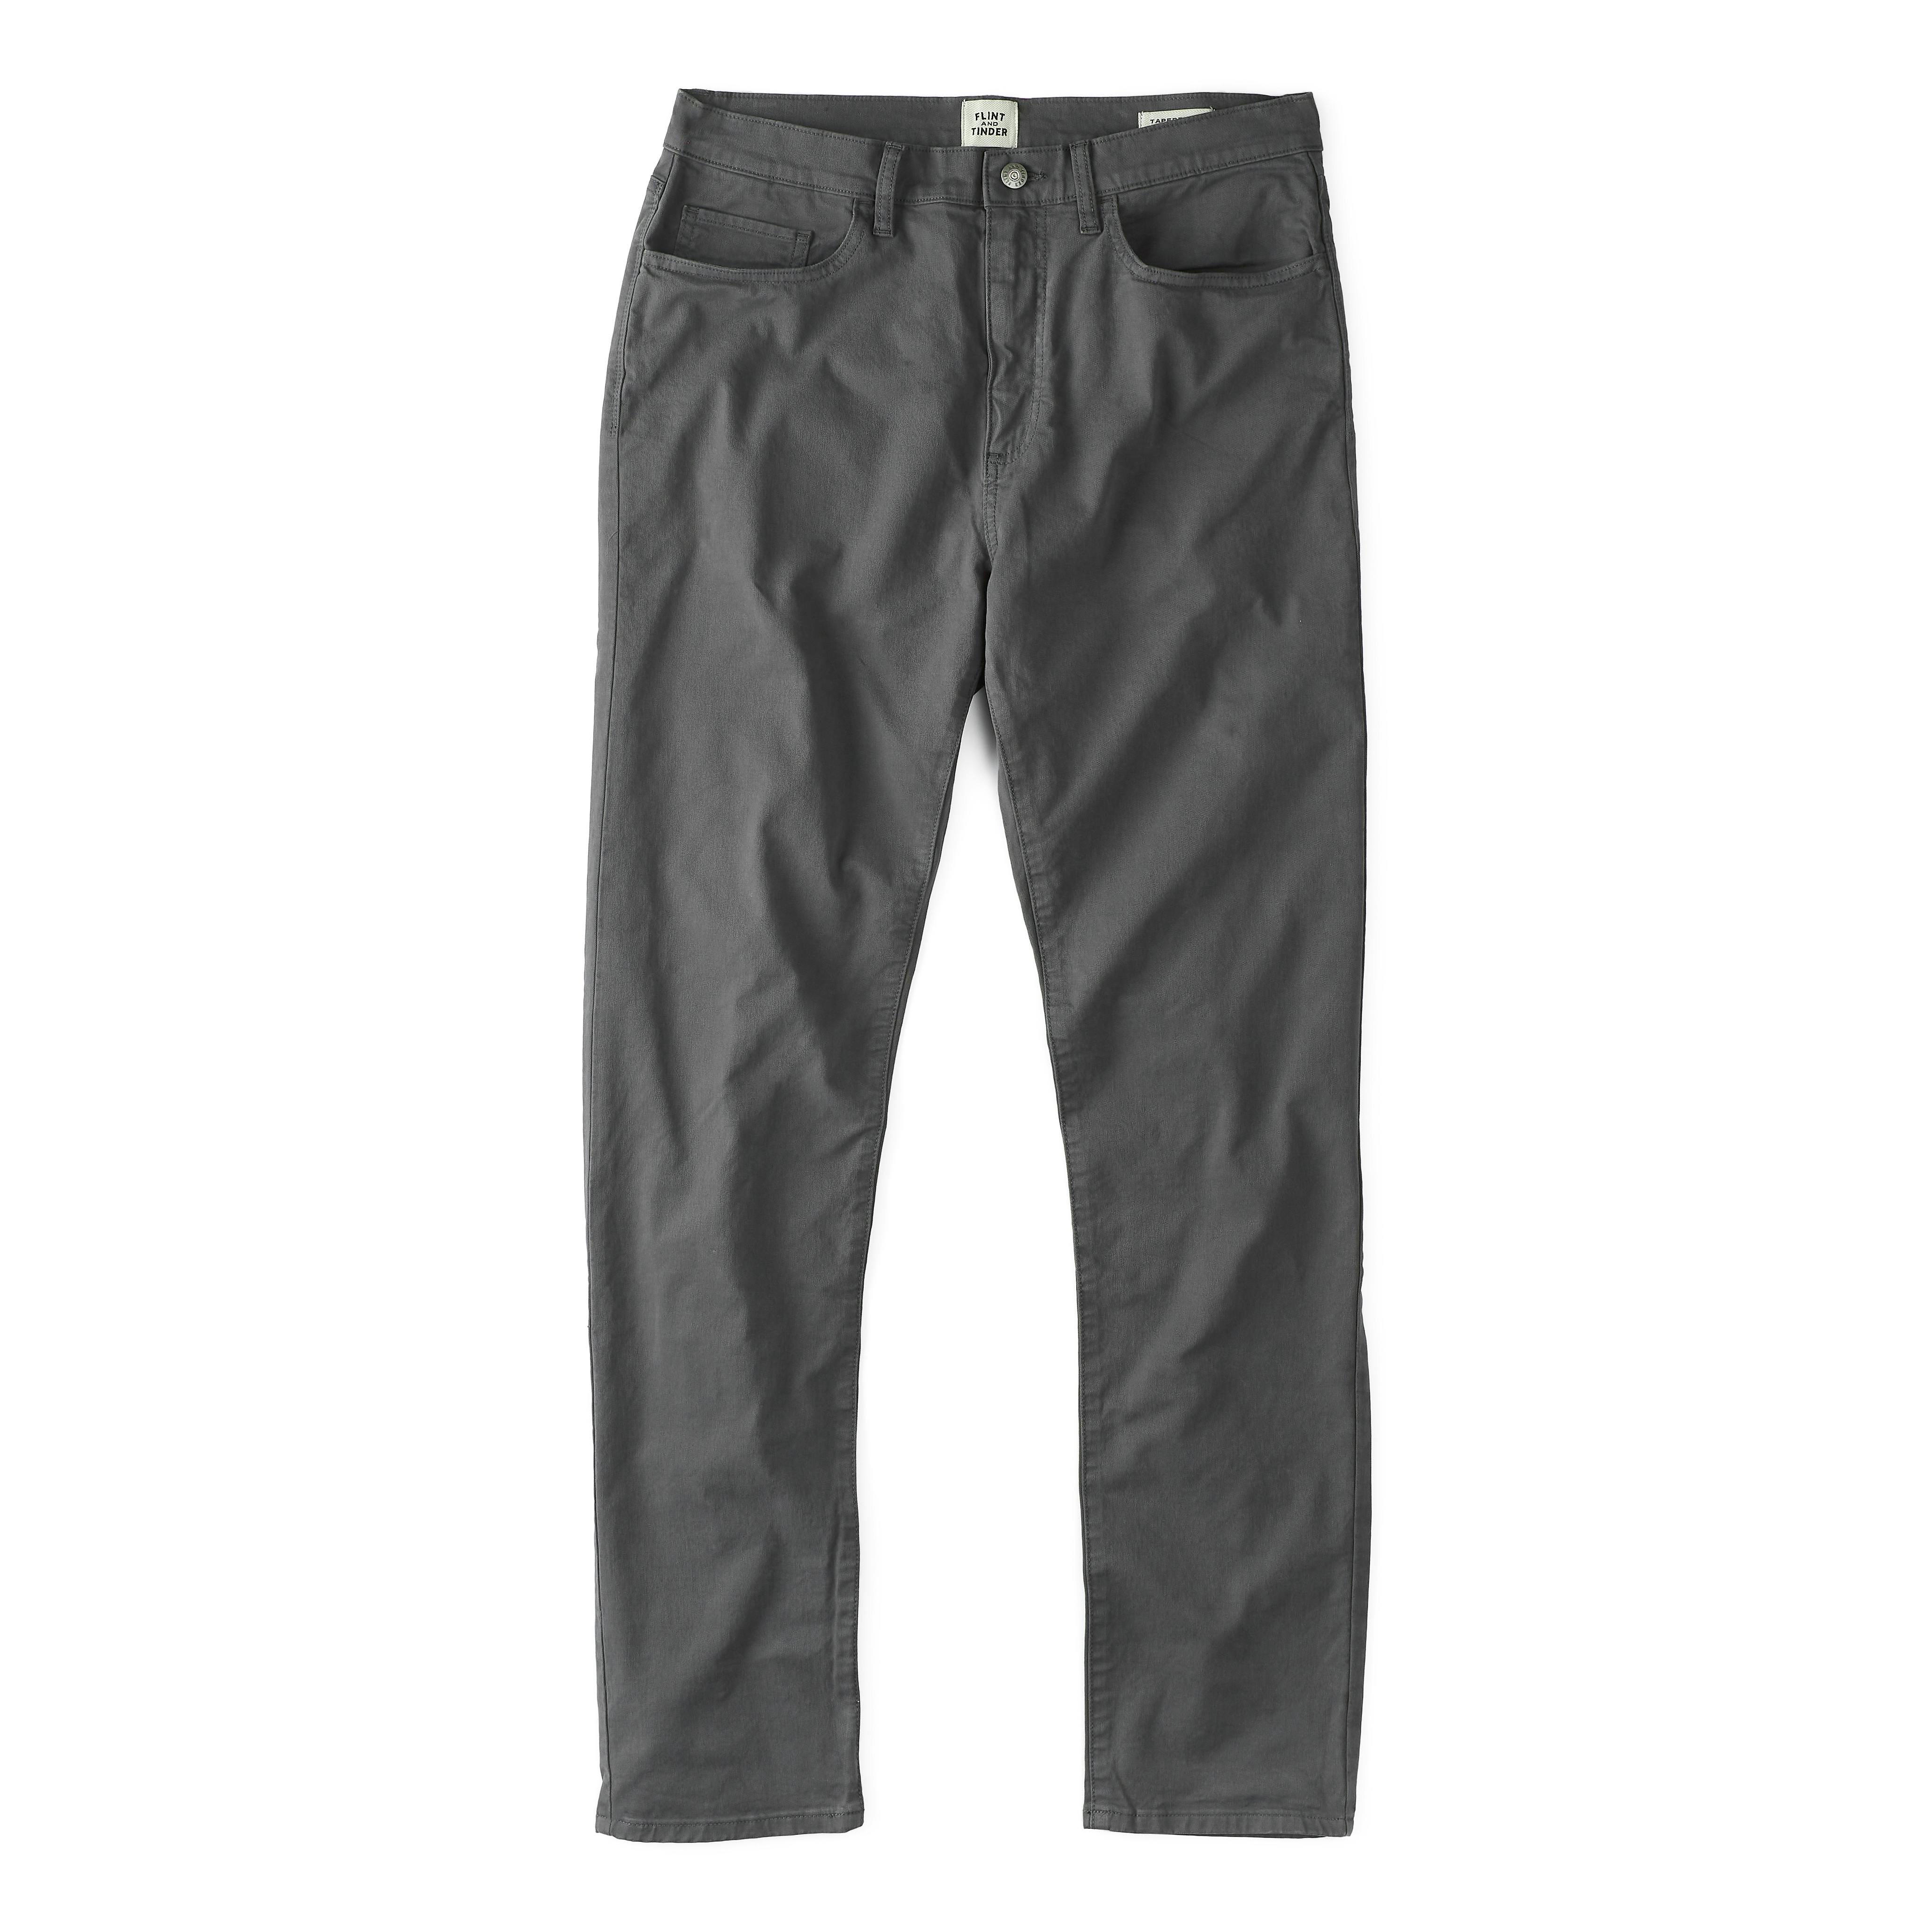 Jean Cut Pants, Athletic Fit – Dockers®